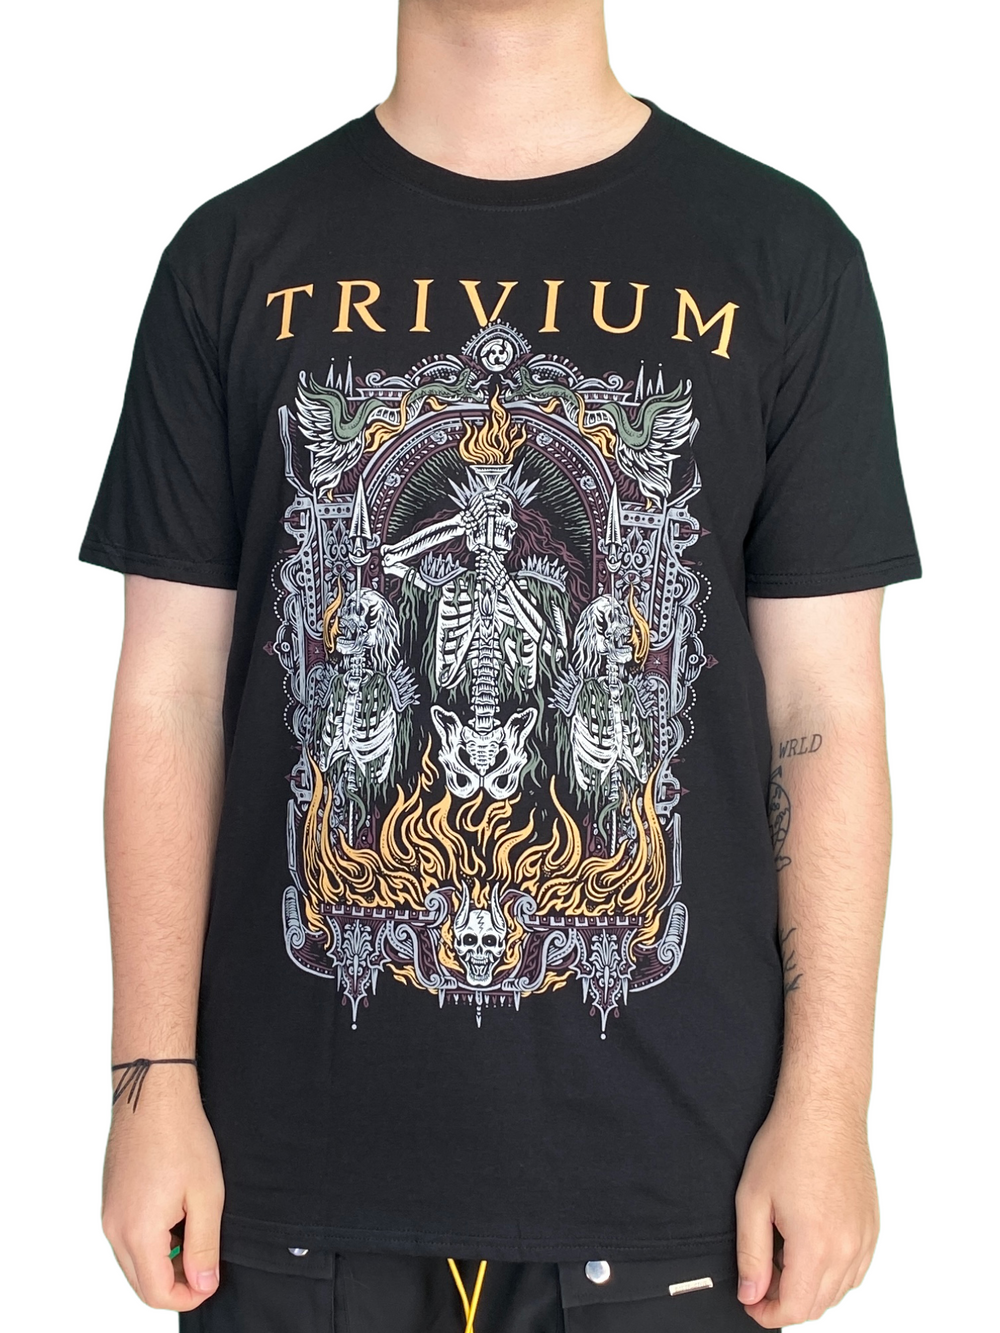 Trivium Skelly Frame Unisex Official T Shirt Brand New Various Sizes